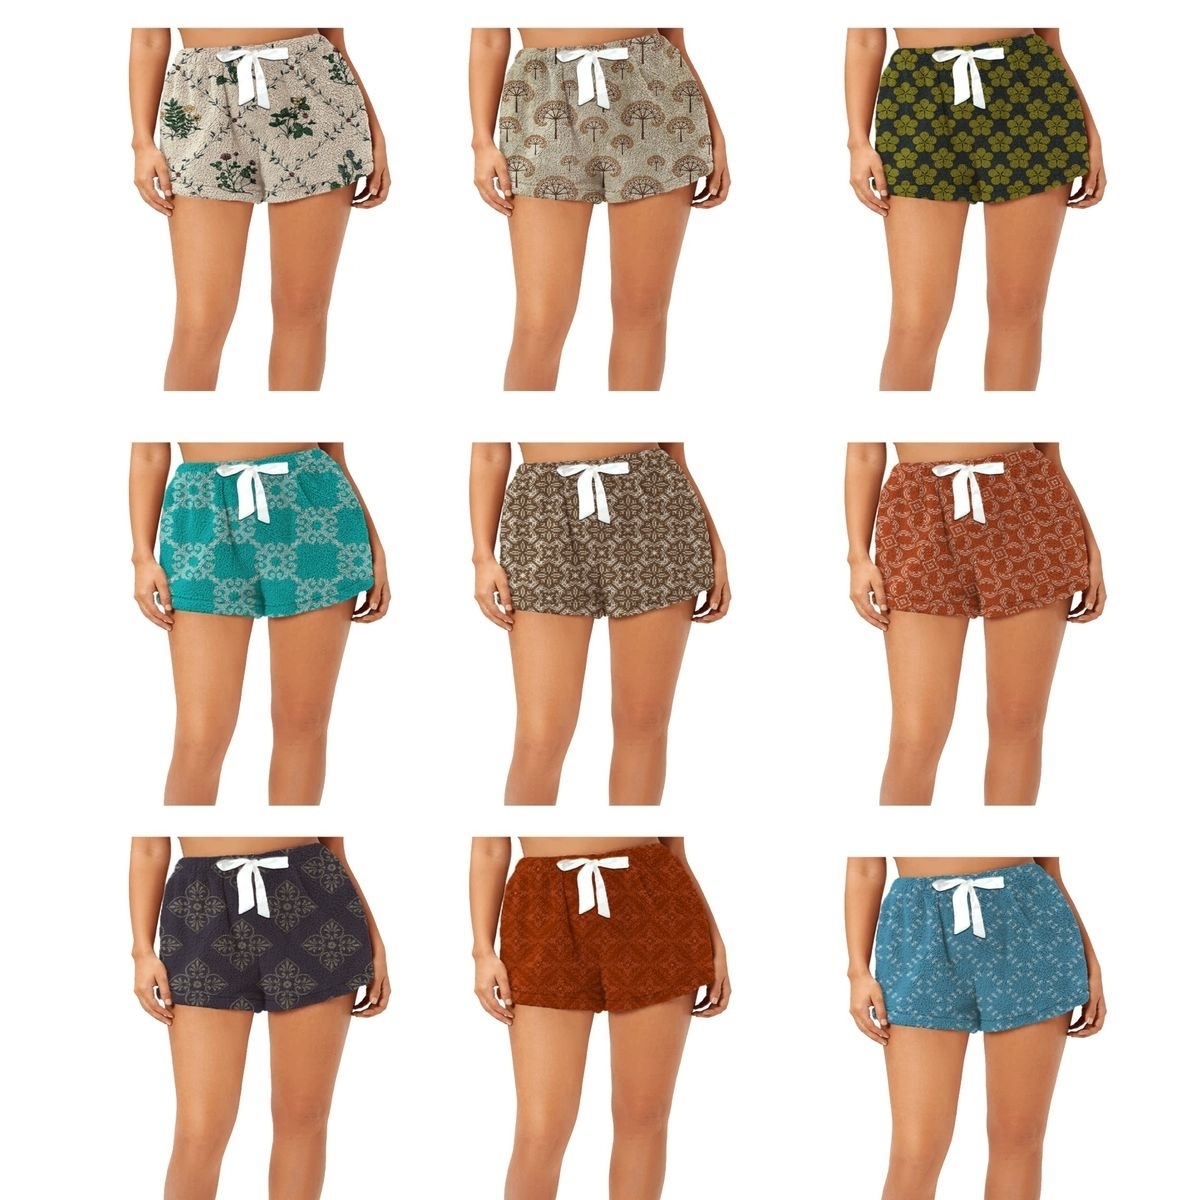 5-Pack: Women's Ultra Plush Micro-Fleece Soft Printed Pajama Shorts - Large, Animal